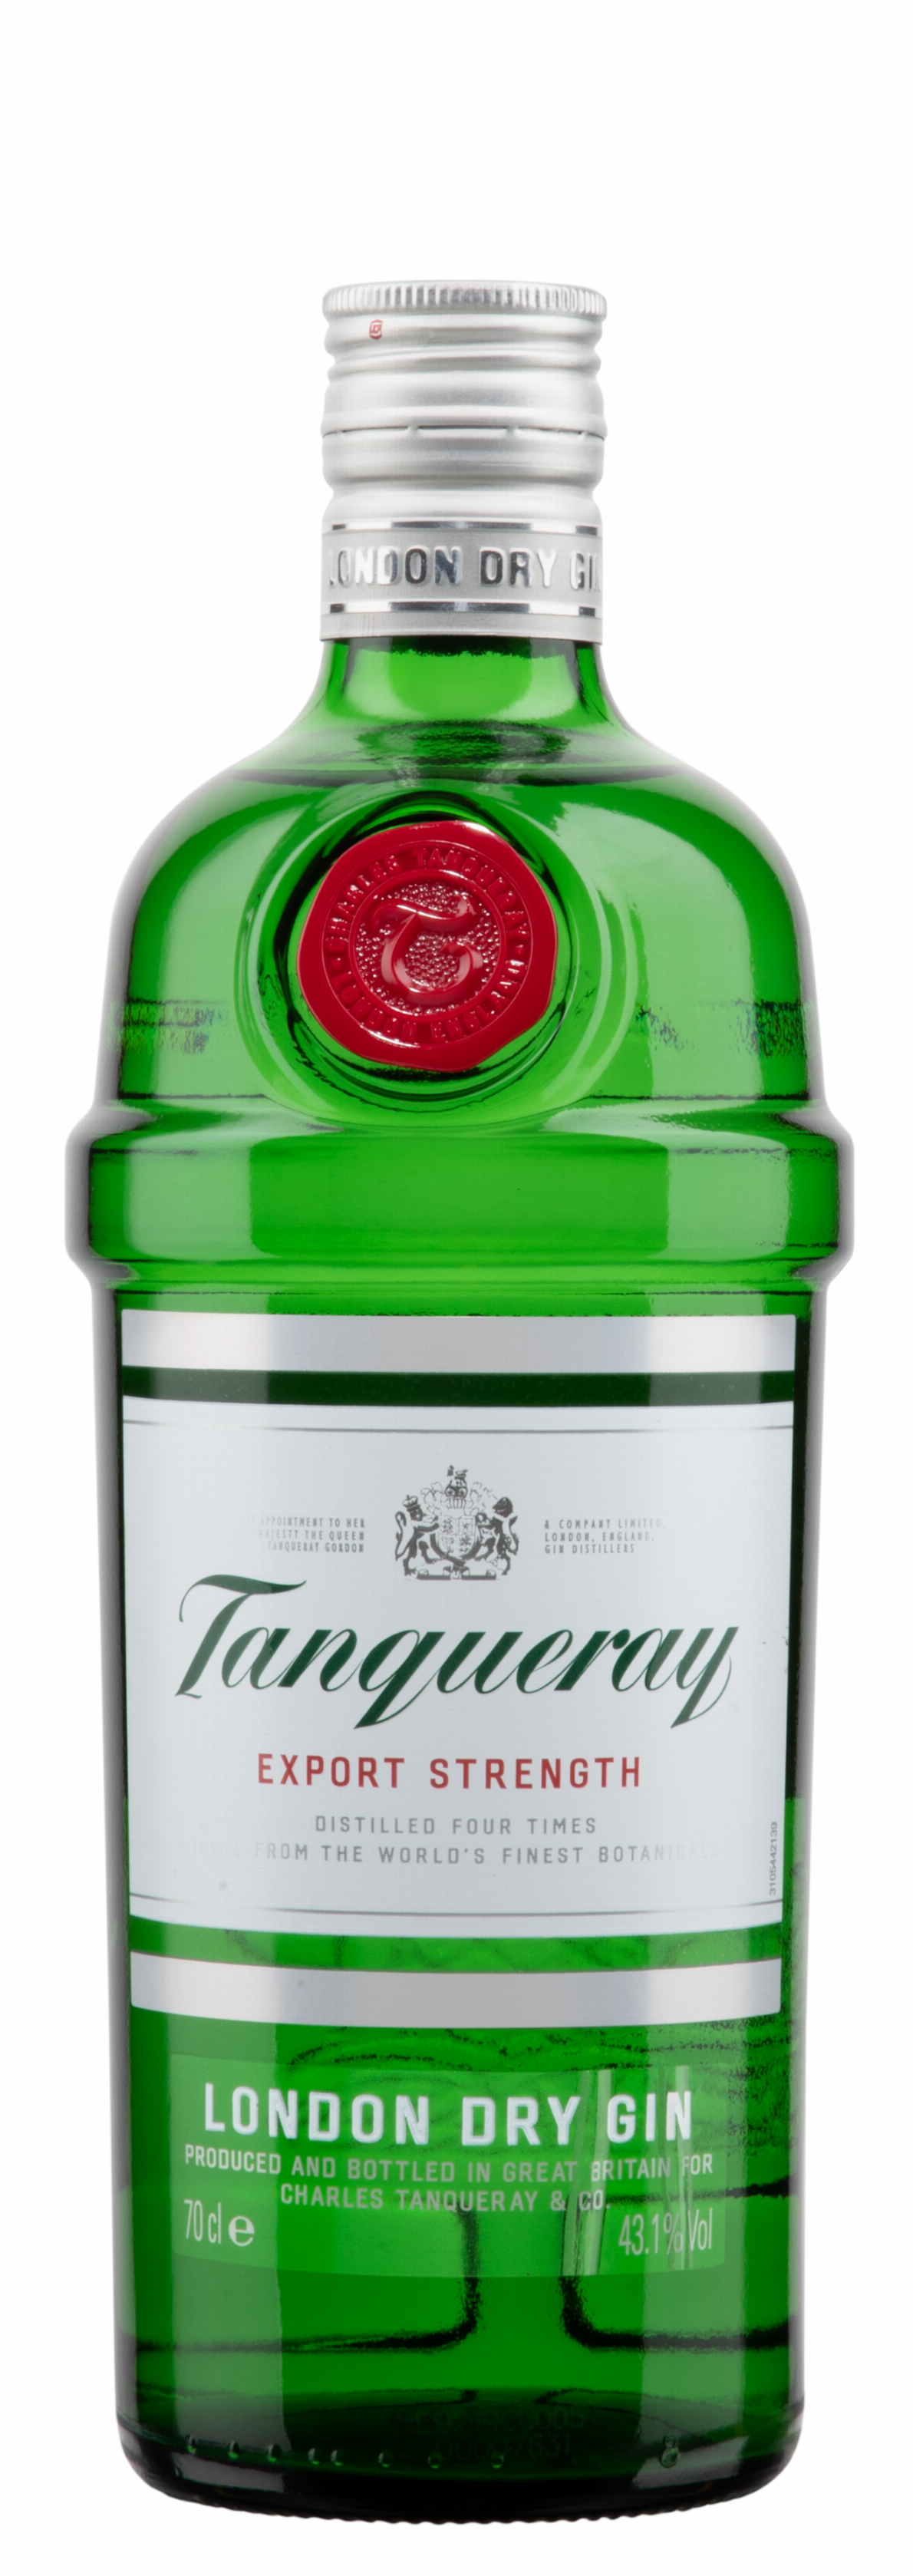 Tanqueray London Dry Gin lassen nach » Hause 43.1% liefern